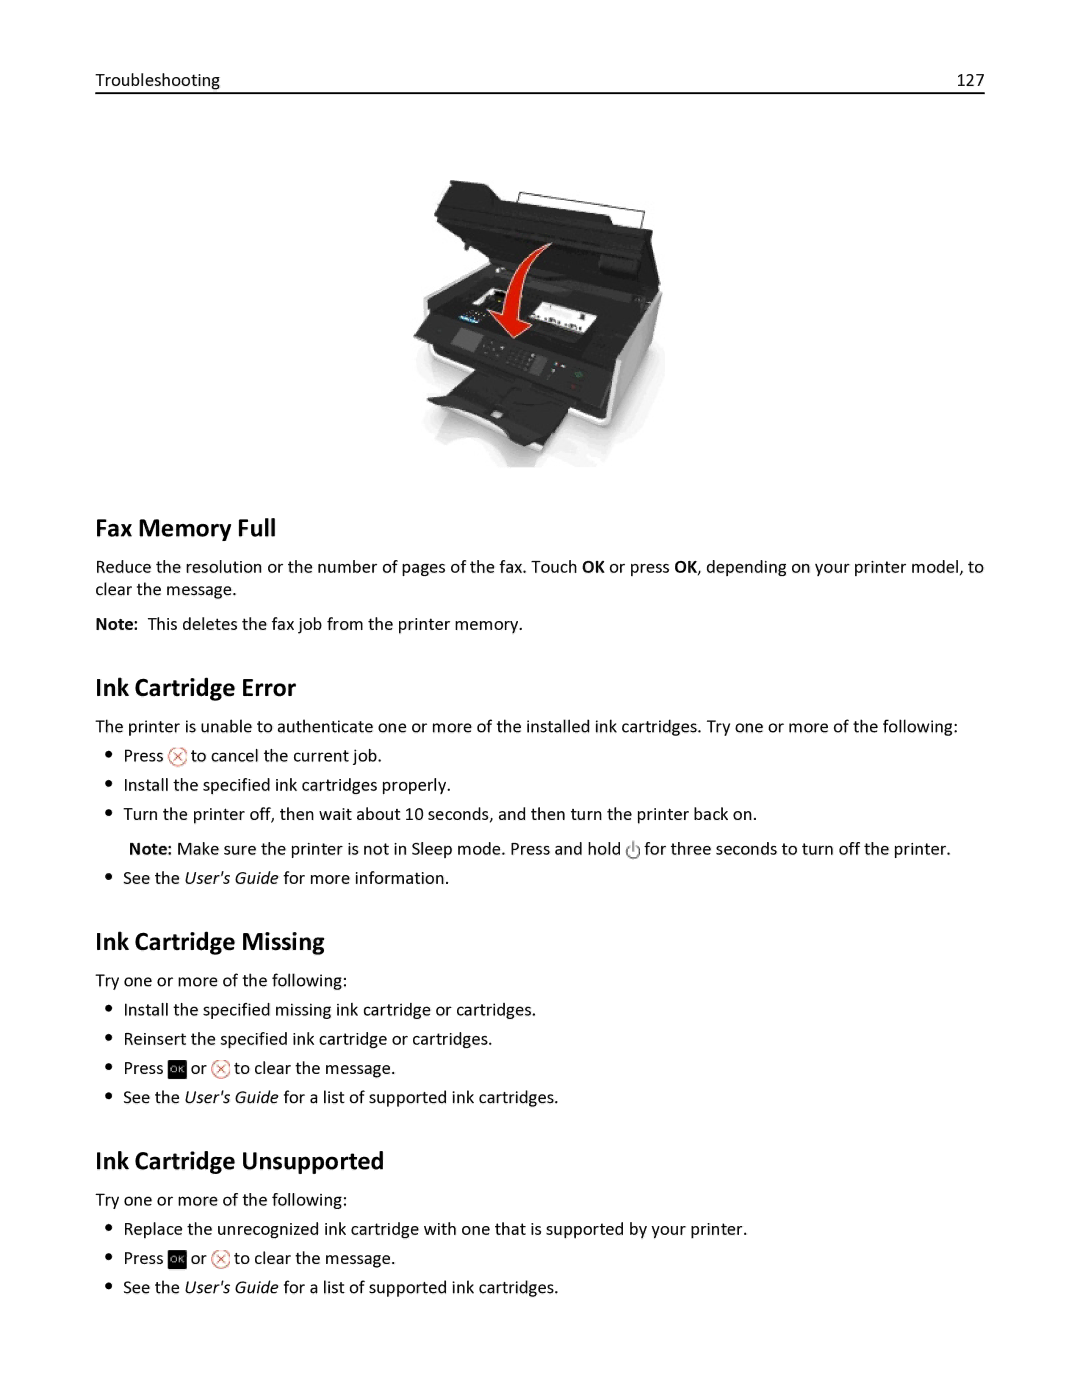 Dell V525W manual Fax Memory Full, Ink Cartridge Error, Ink Cartridge Missing, Ink Cartridge Unsupported 